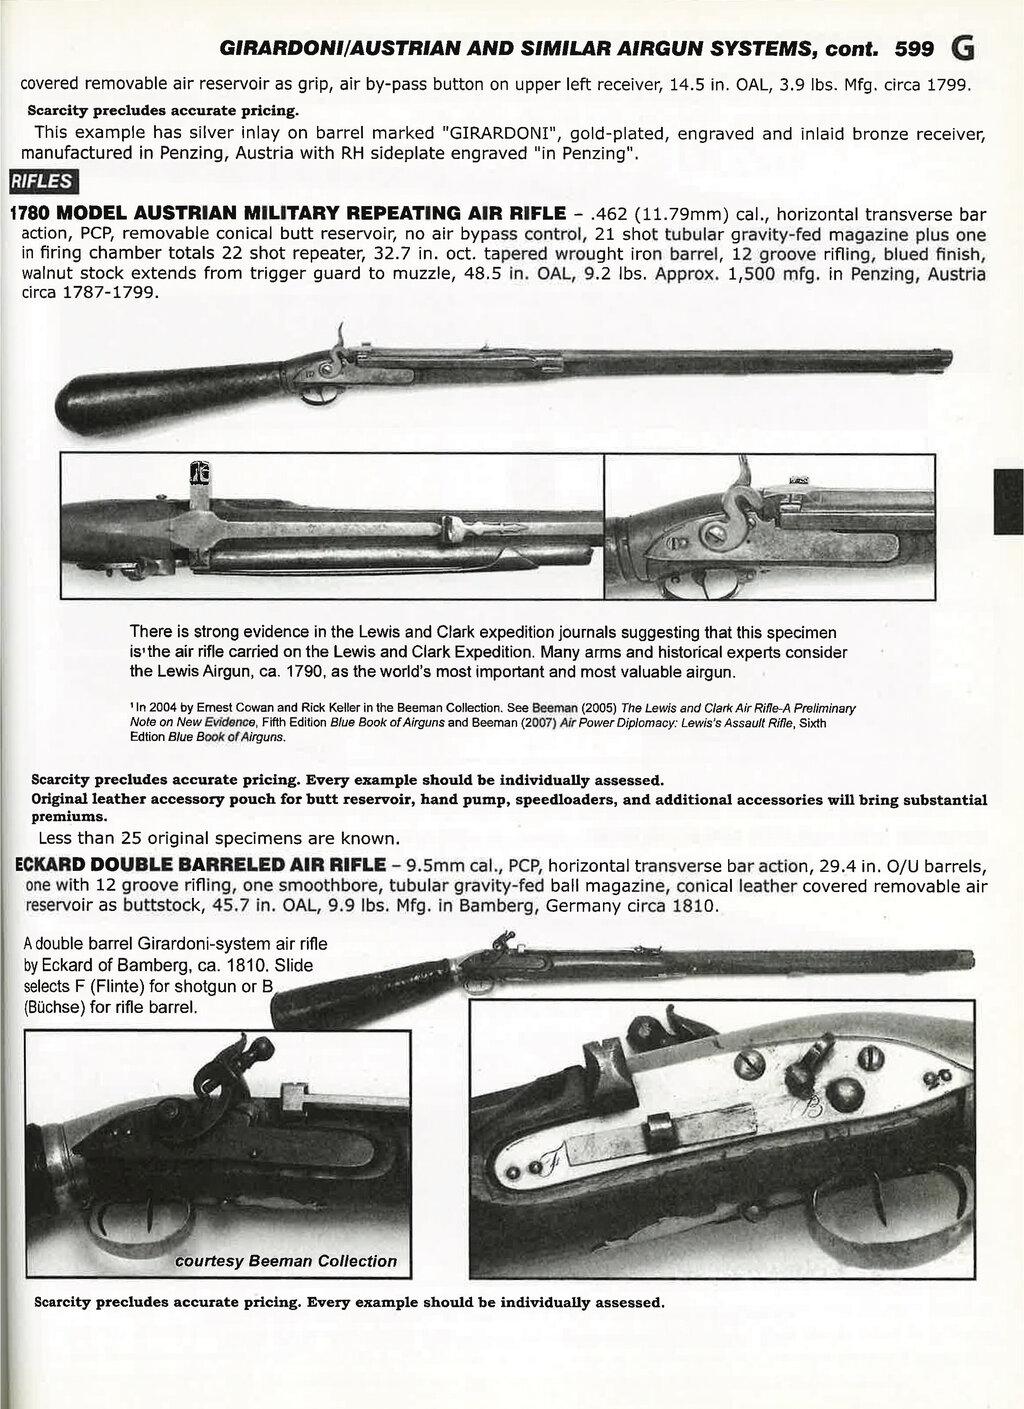 Austrian Military Model 1780 Girardoni Repeating Air Rifle